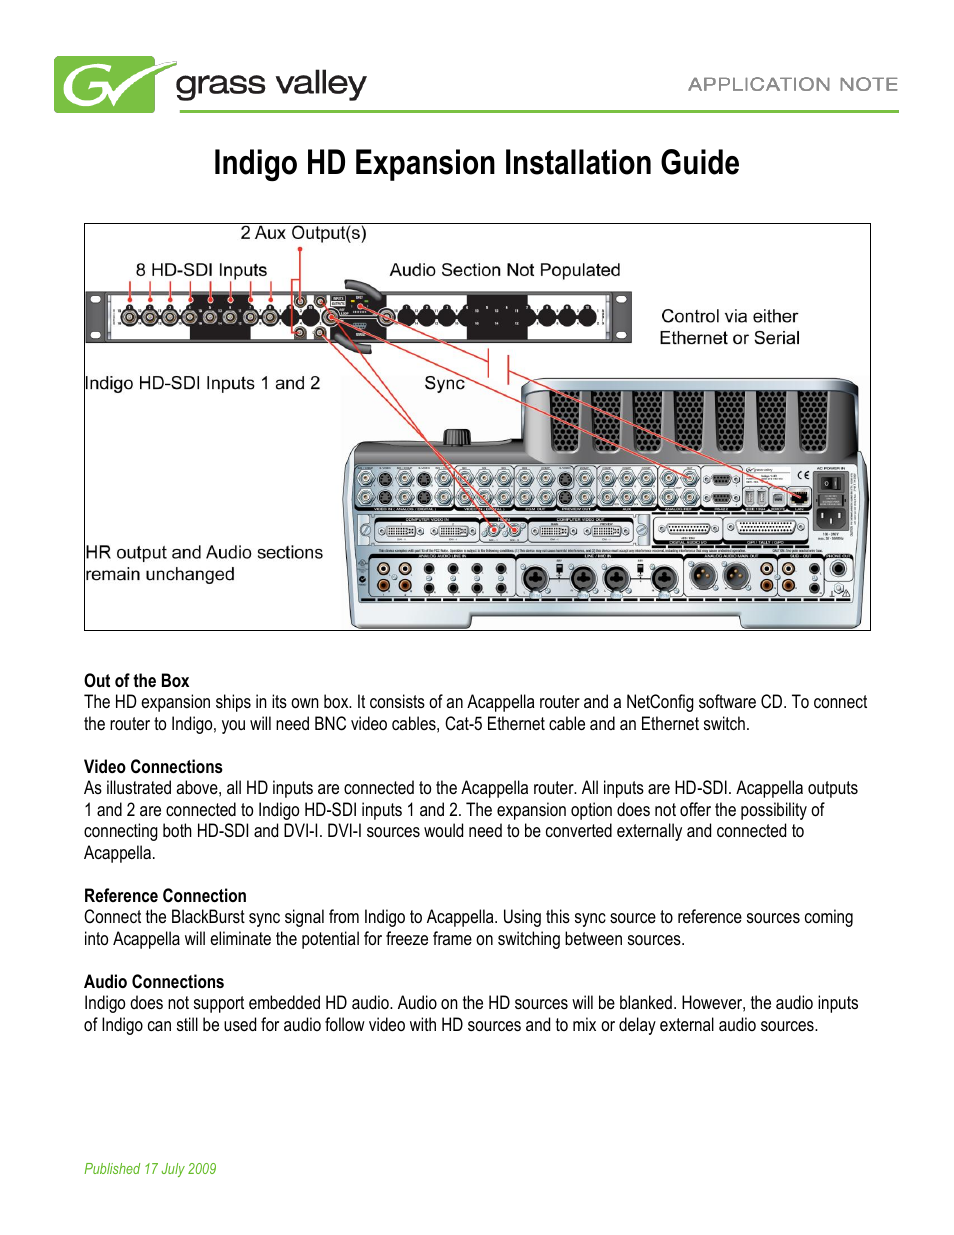 Indigo HD Expansion Solution